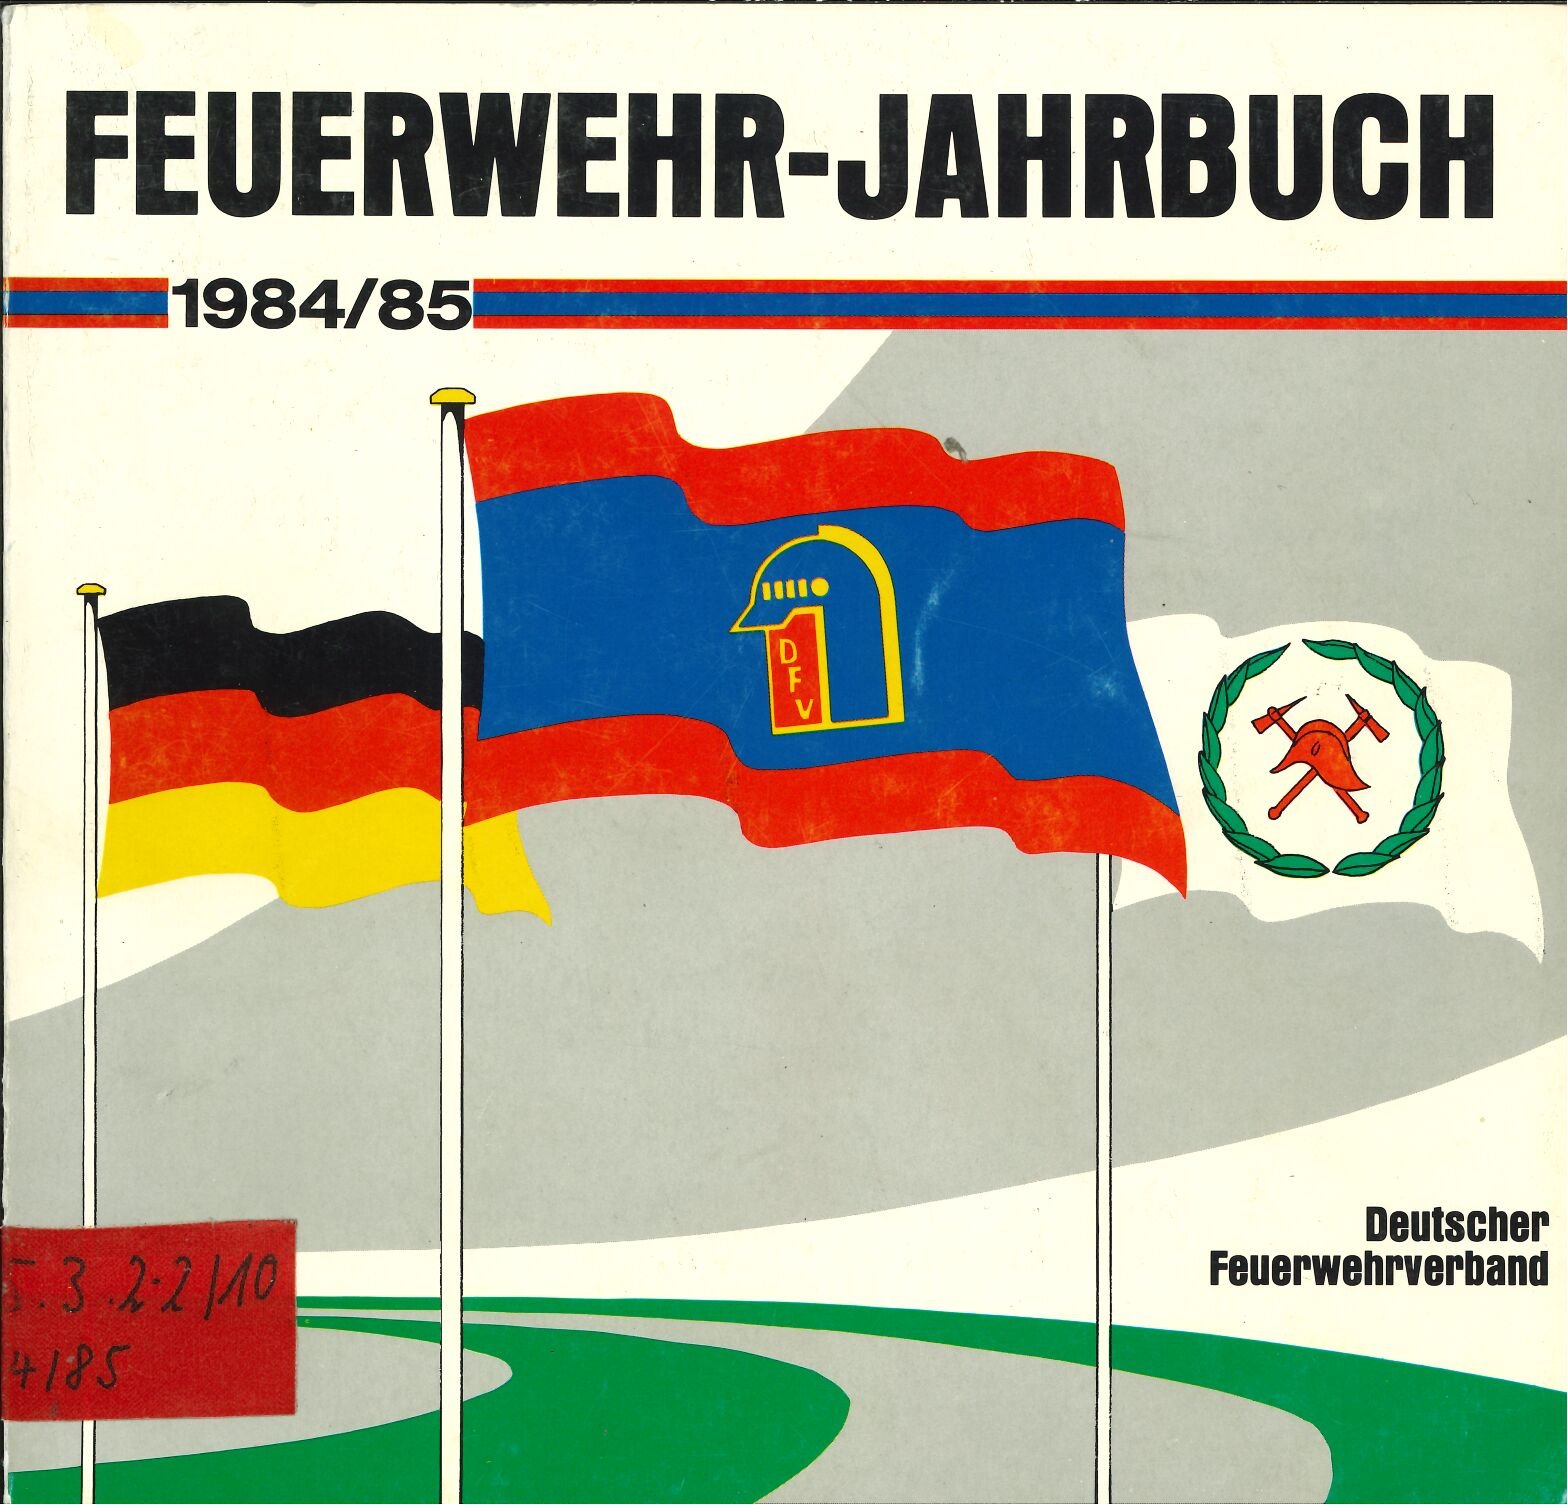 Feuerwehr-Jahrbuch 1984/85 (Feuerwehrmuseum Grethen CC BY-NC-SA)